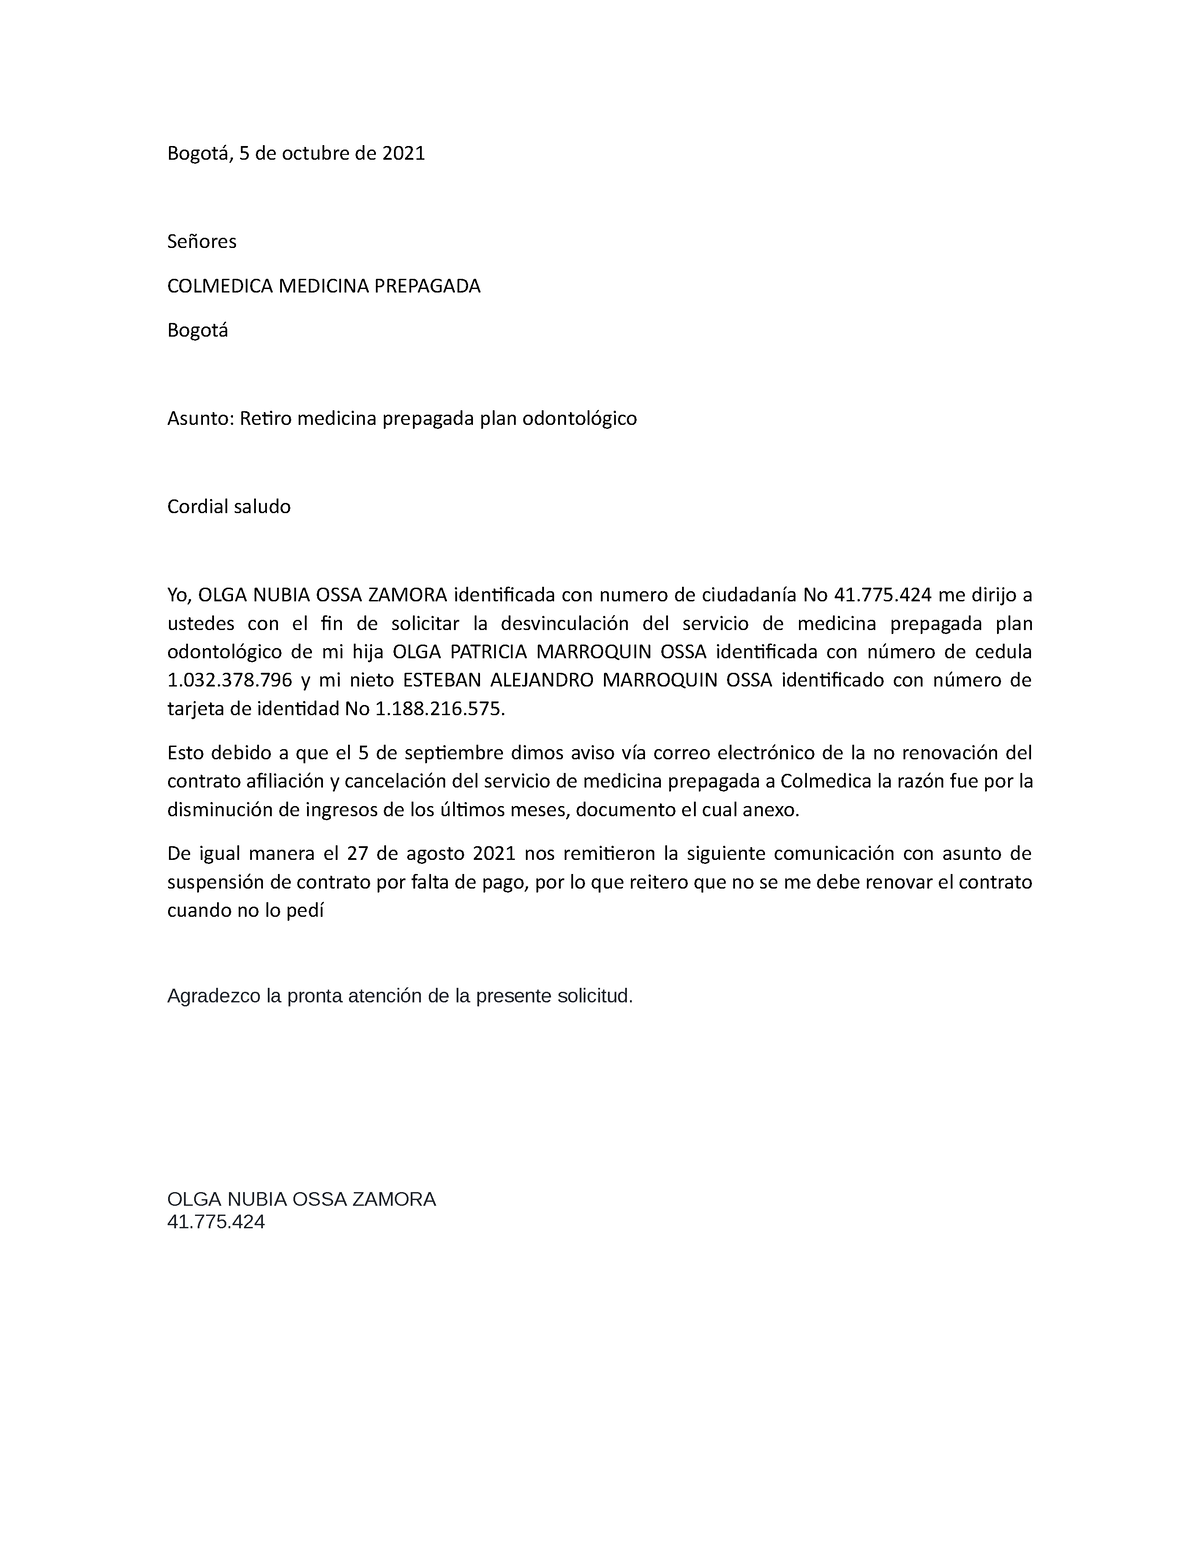 536760567 Carta Solicitud Retiro Colmedica Bogotá 5 De Octubre De